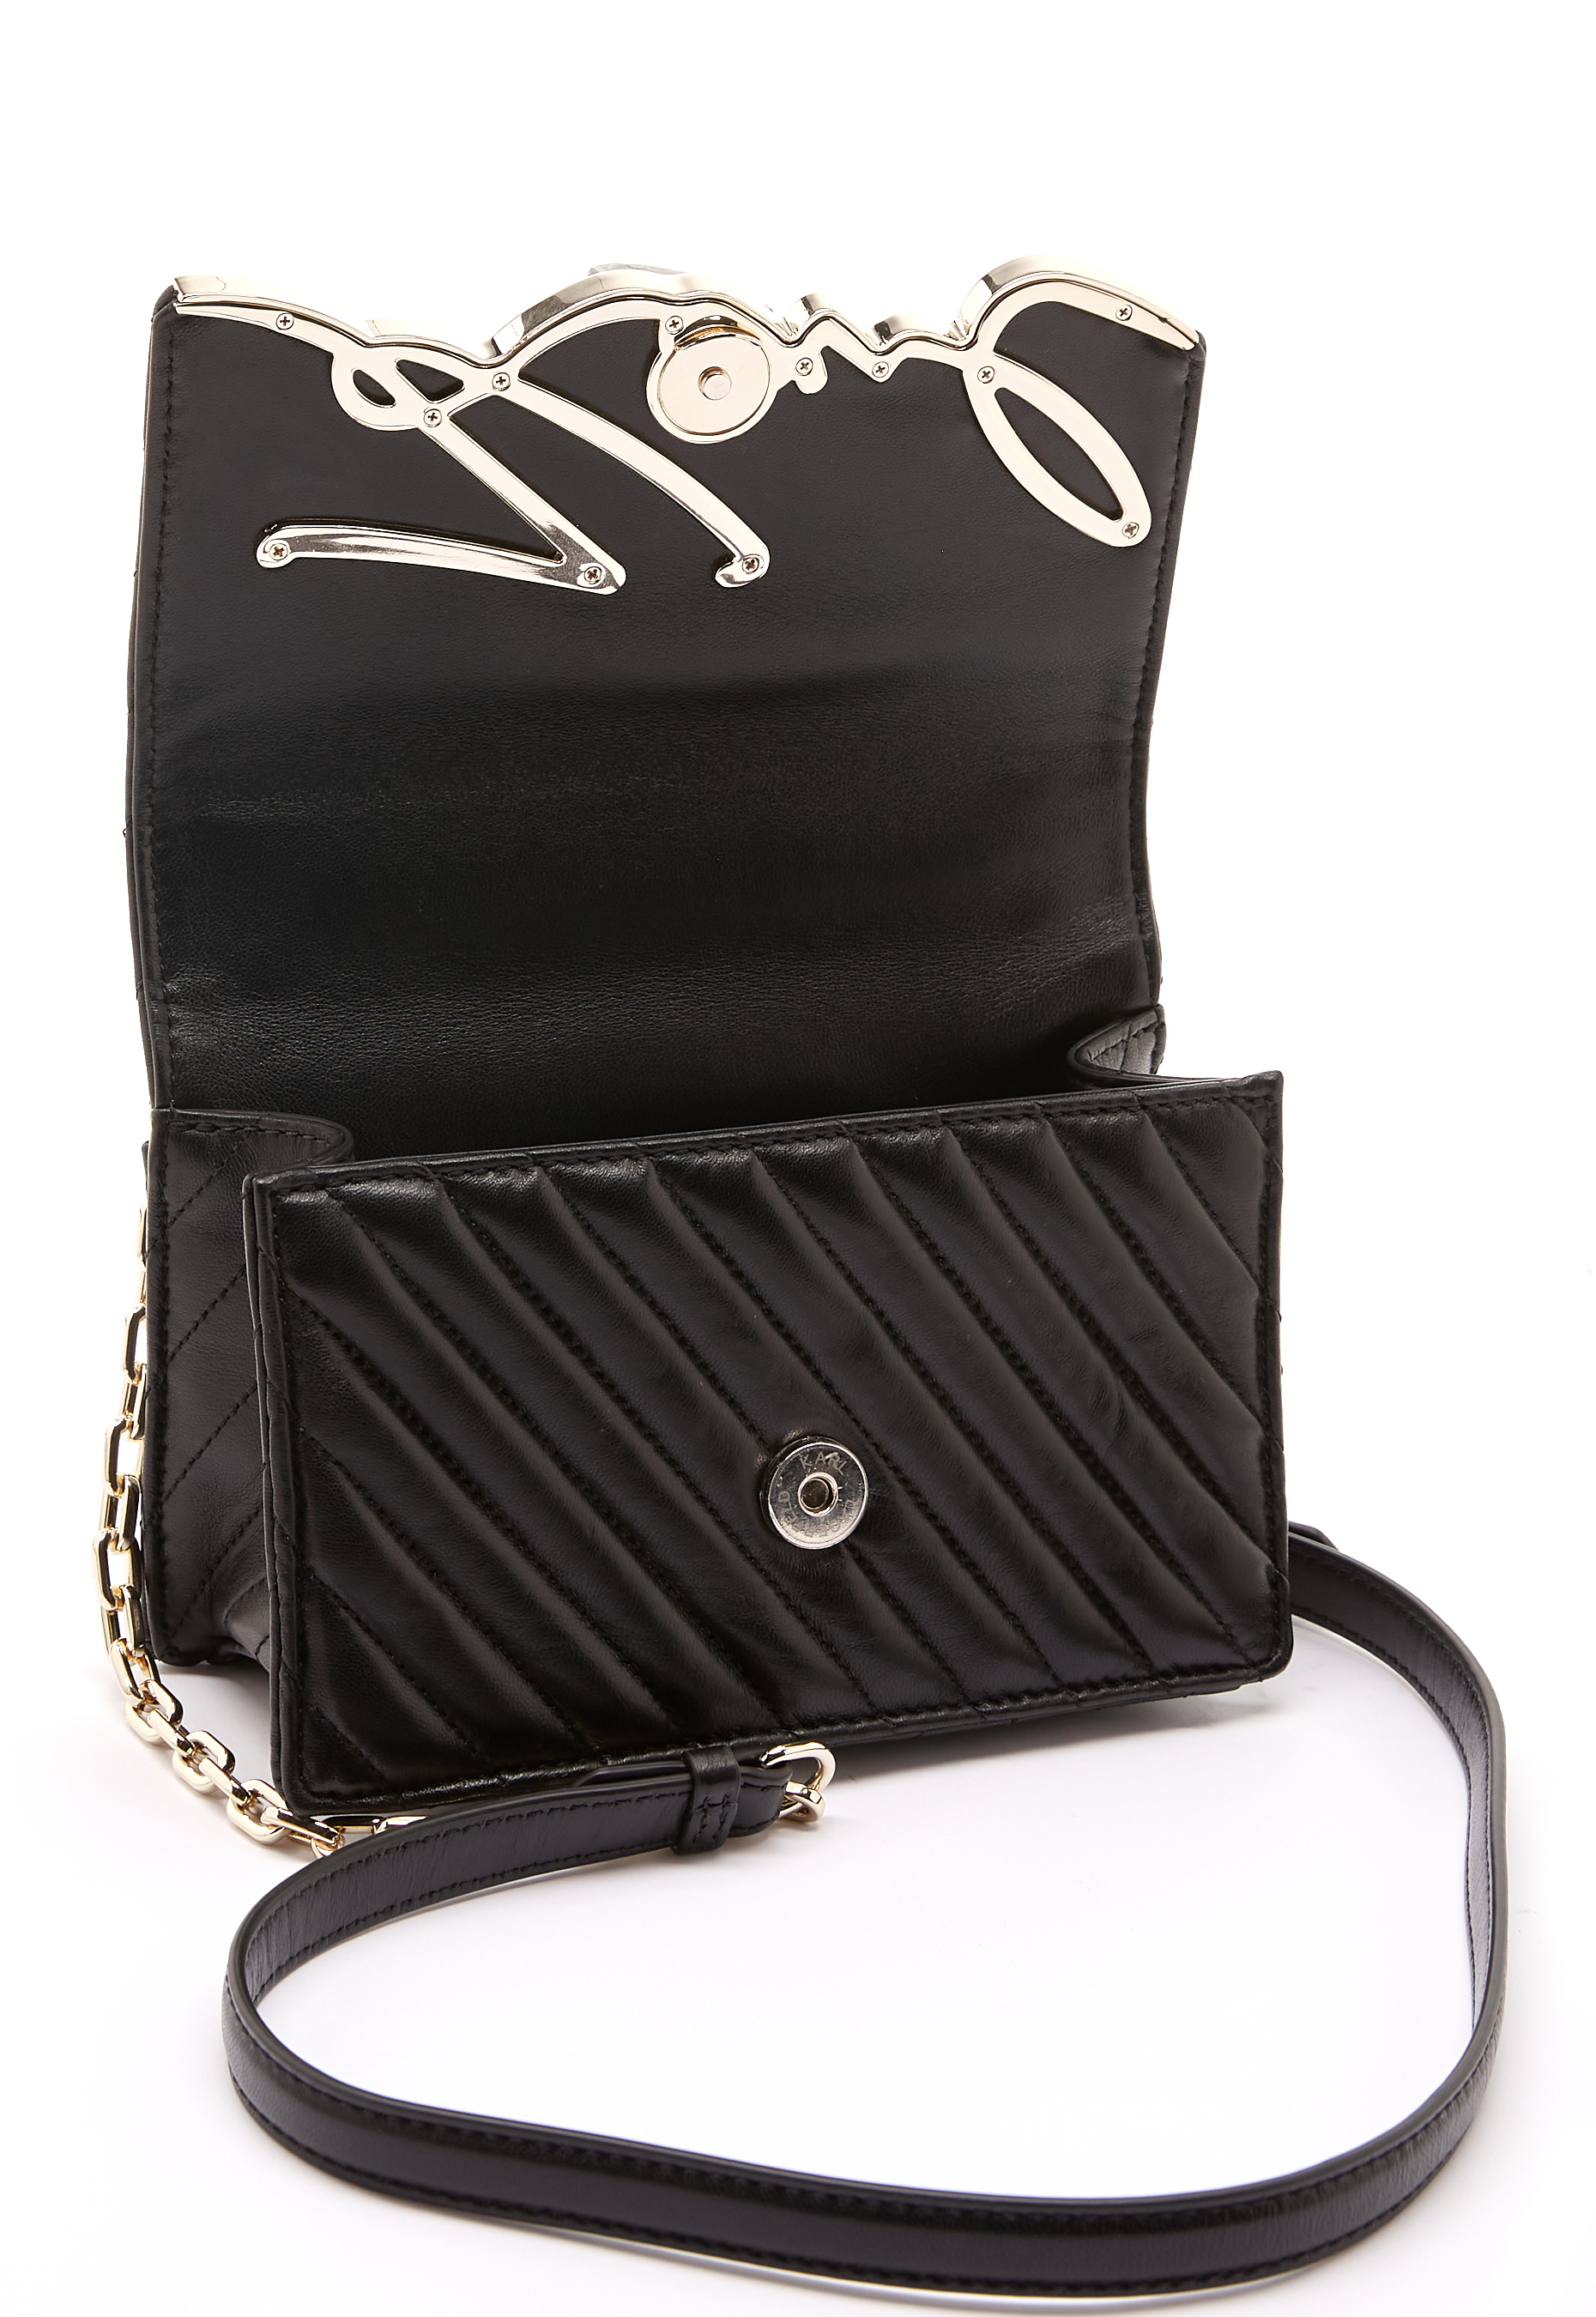 Karl Lagerfeld Signature Stitch S Bag 997 Black/Gold - Bubbleroom